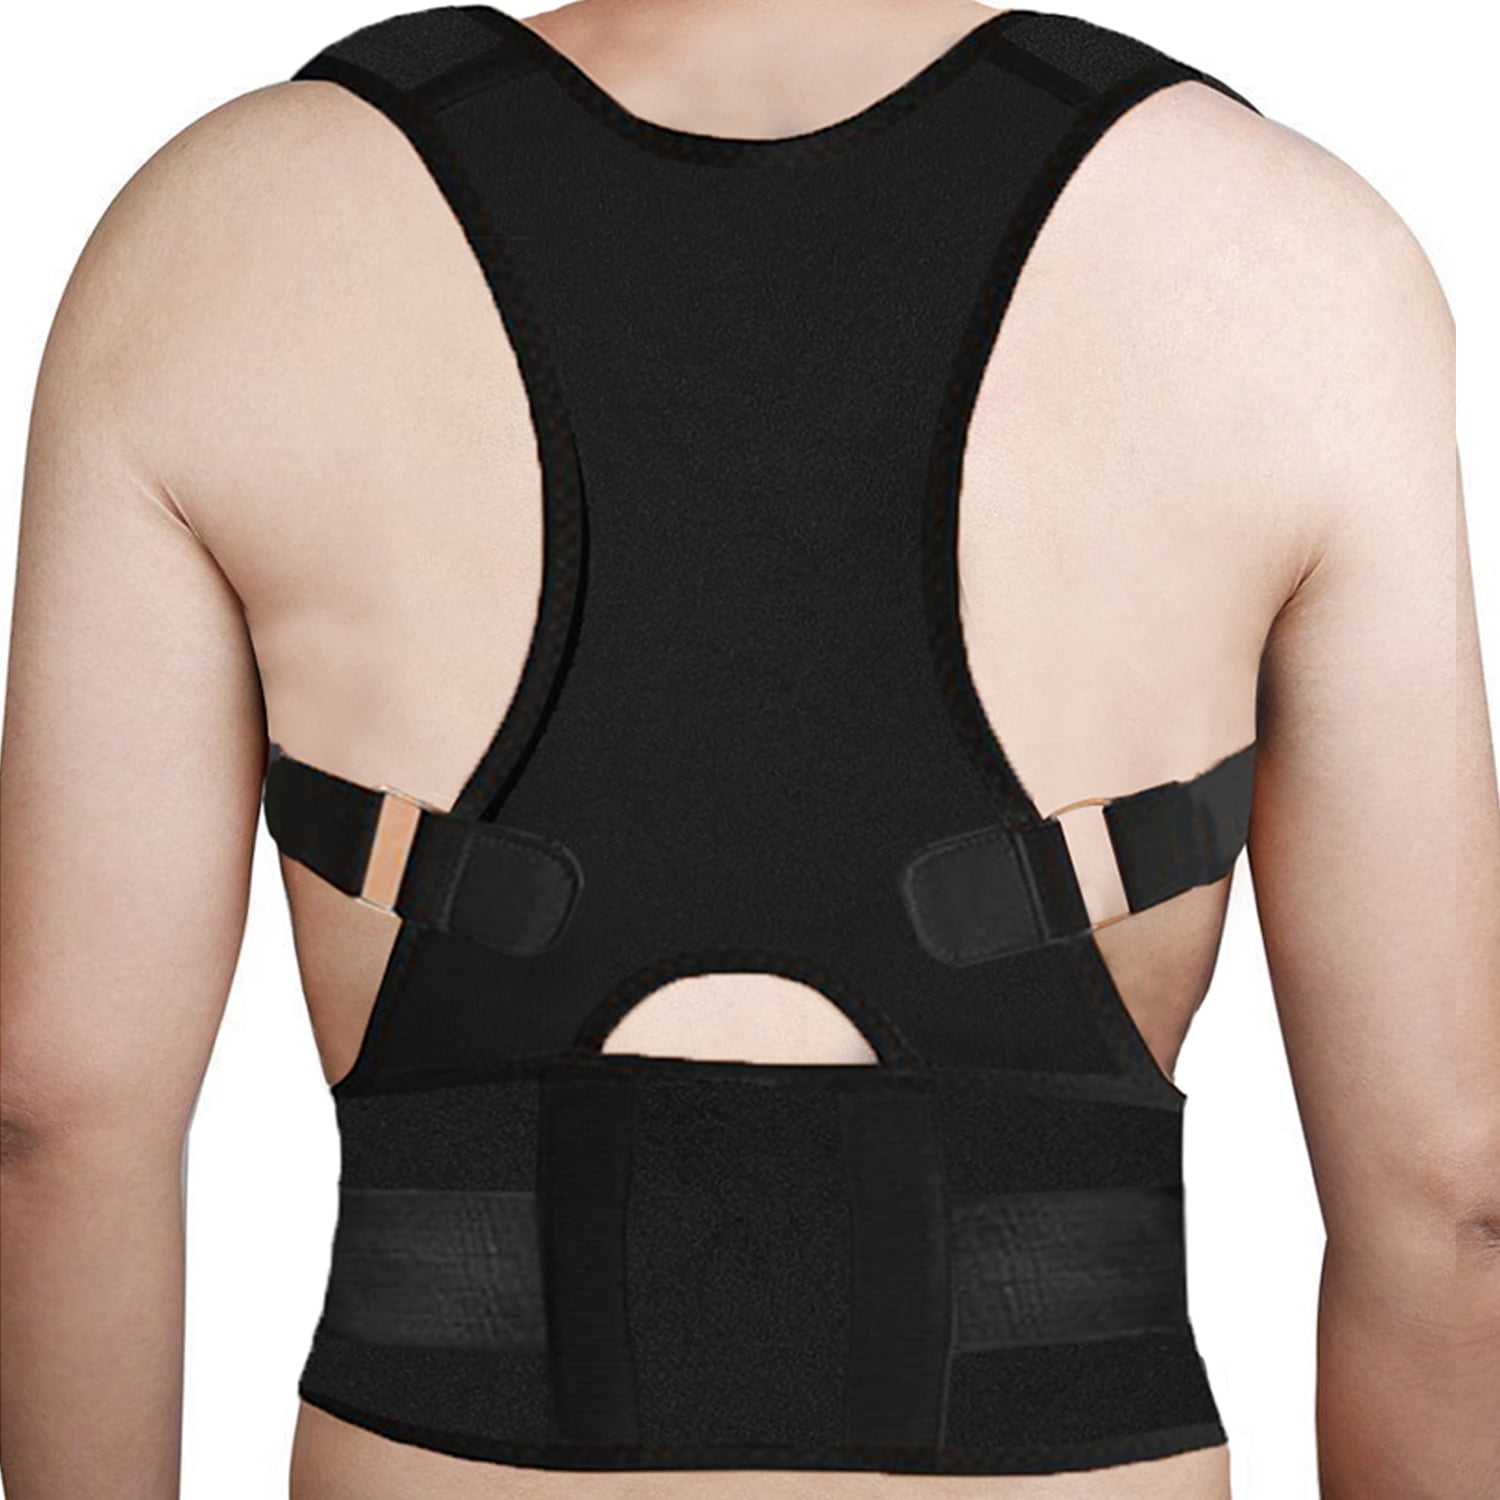 Adjustable Back Brace with Posture Support 